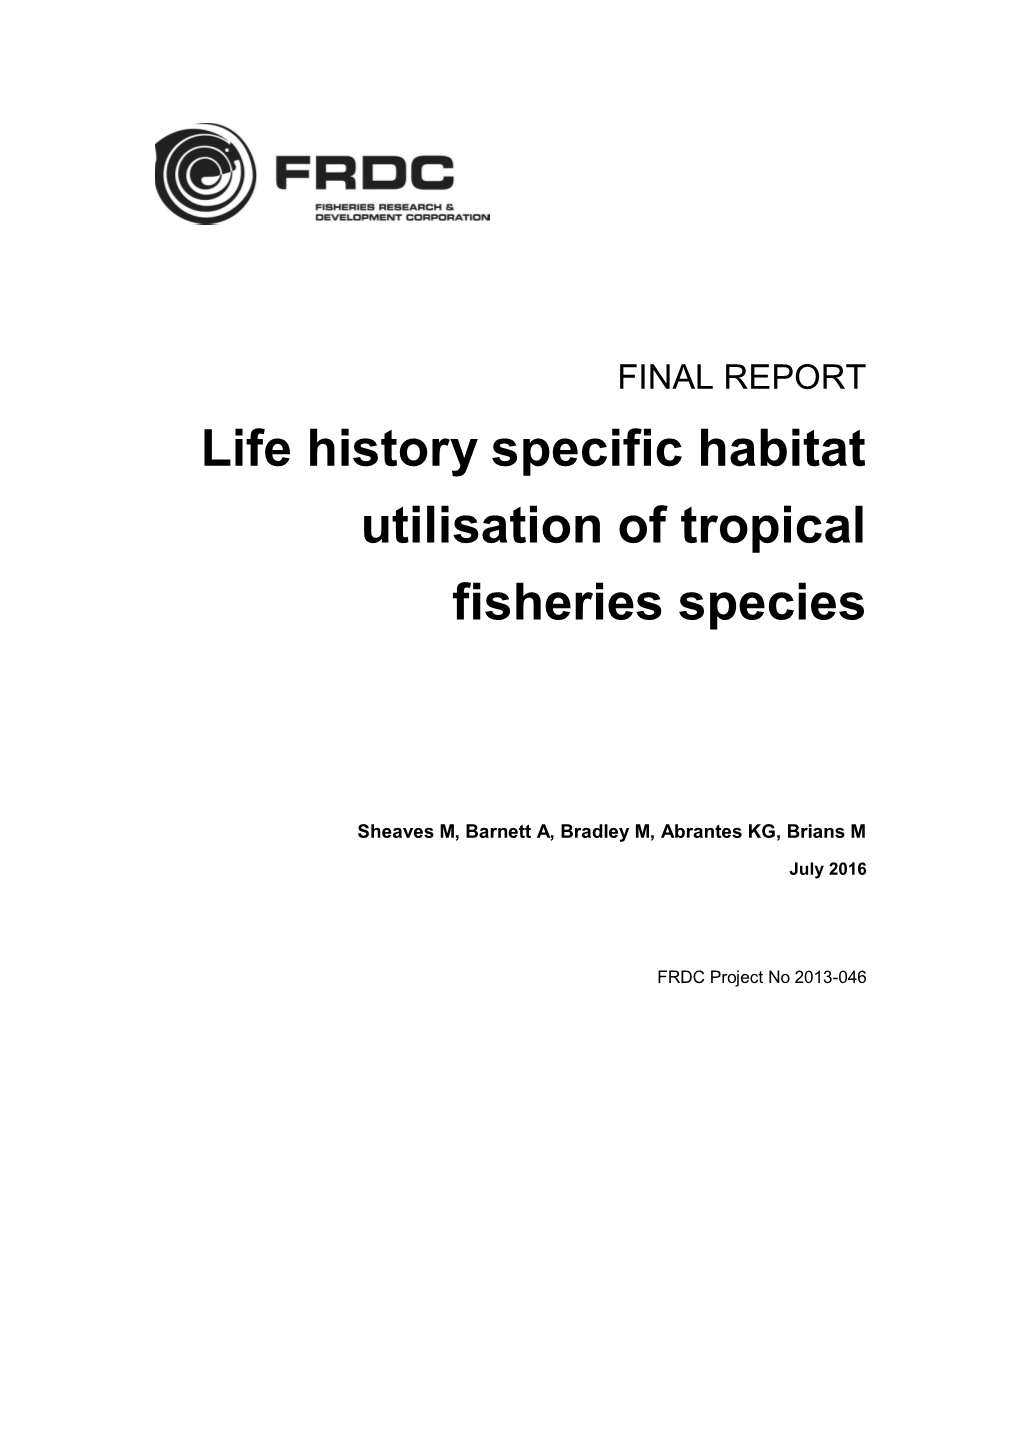 Life History Specific Habitat Utilisation of Tropical Fisheries Species